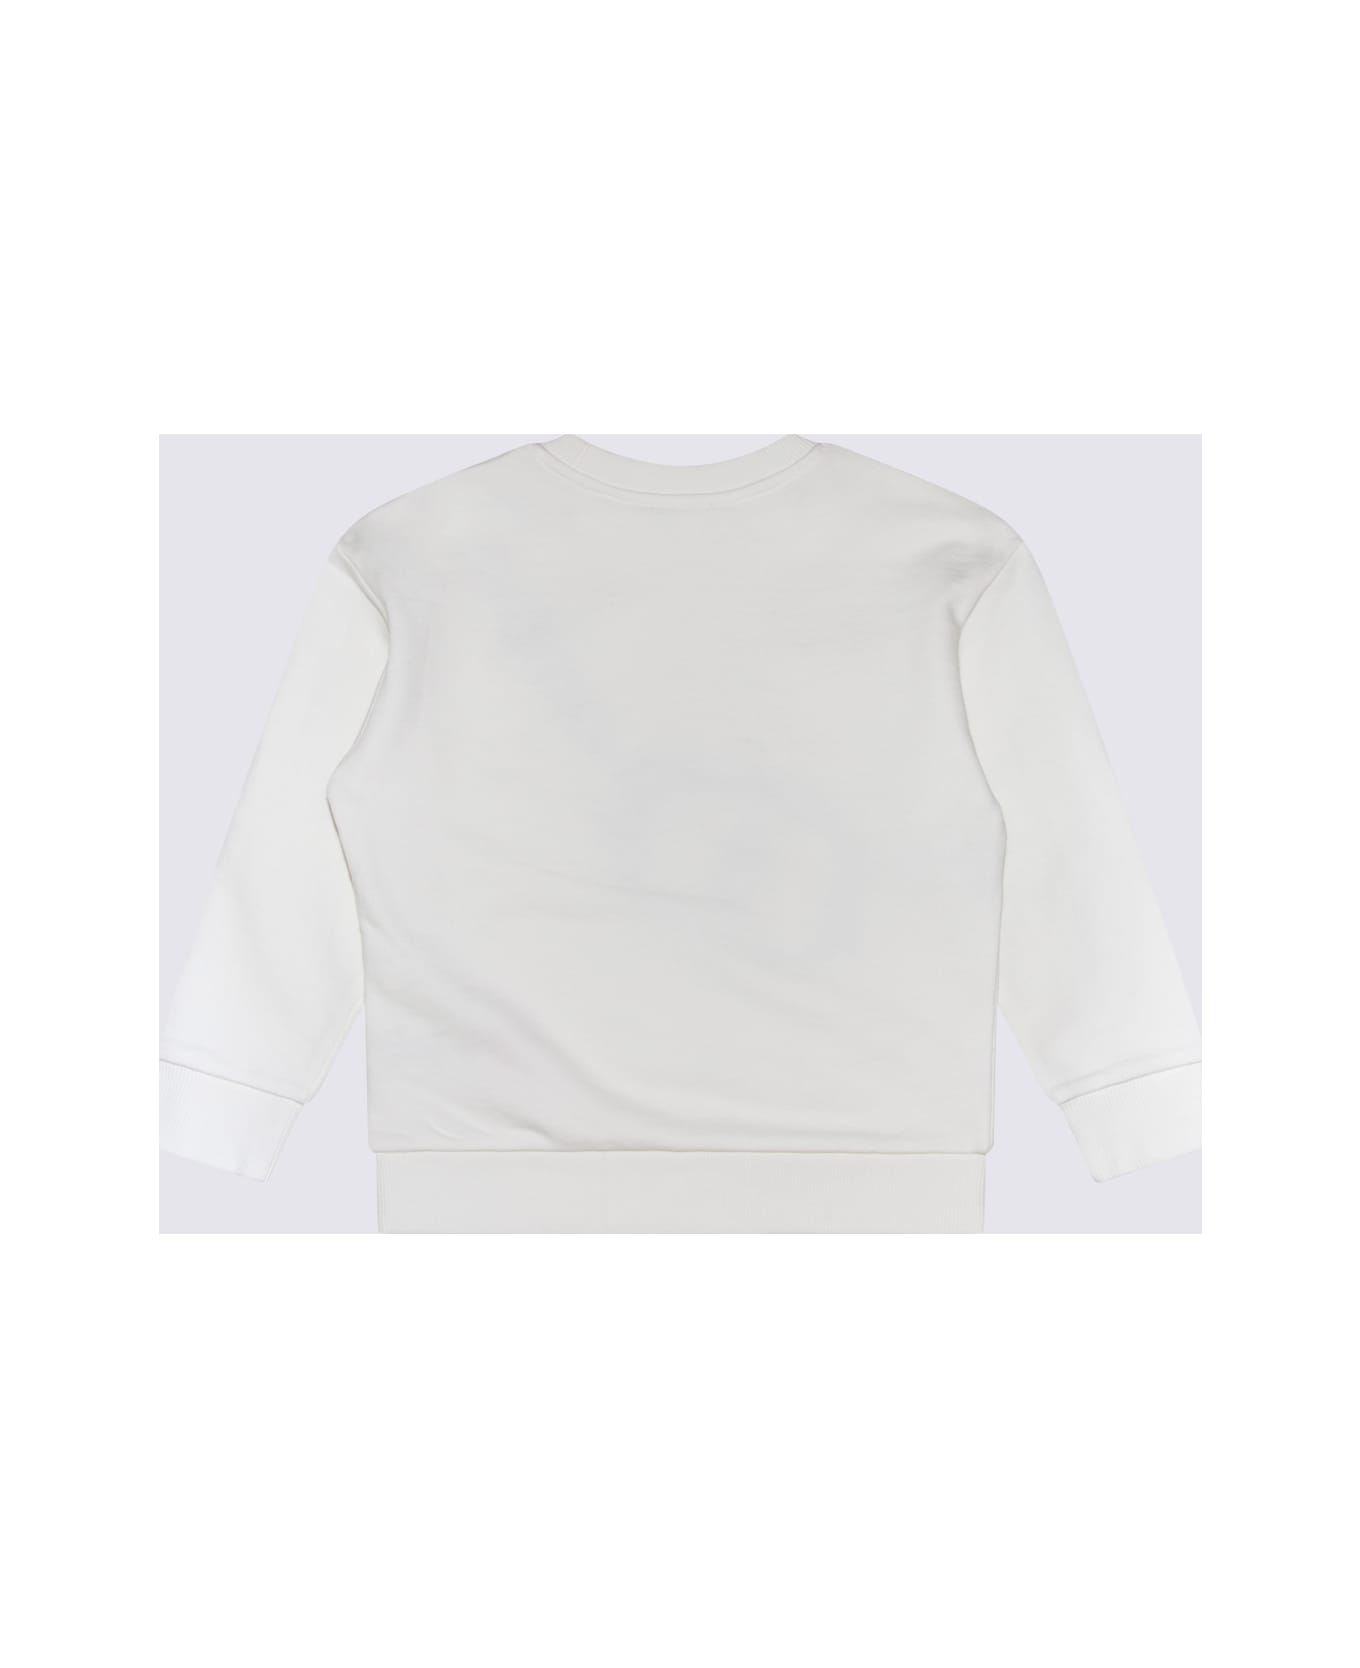 Marc Jacobs White And Black Cotton Sweatshirt - Ivory ニットウェア＆スウェットシャツ